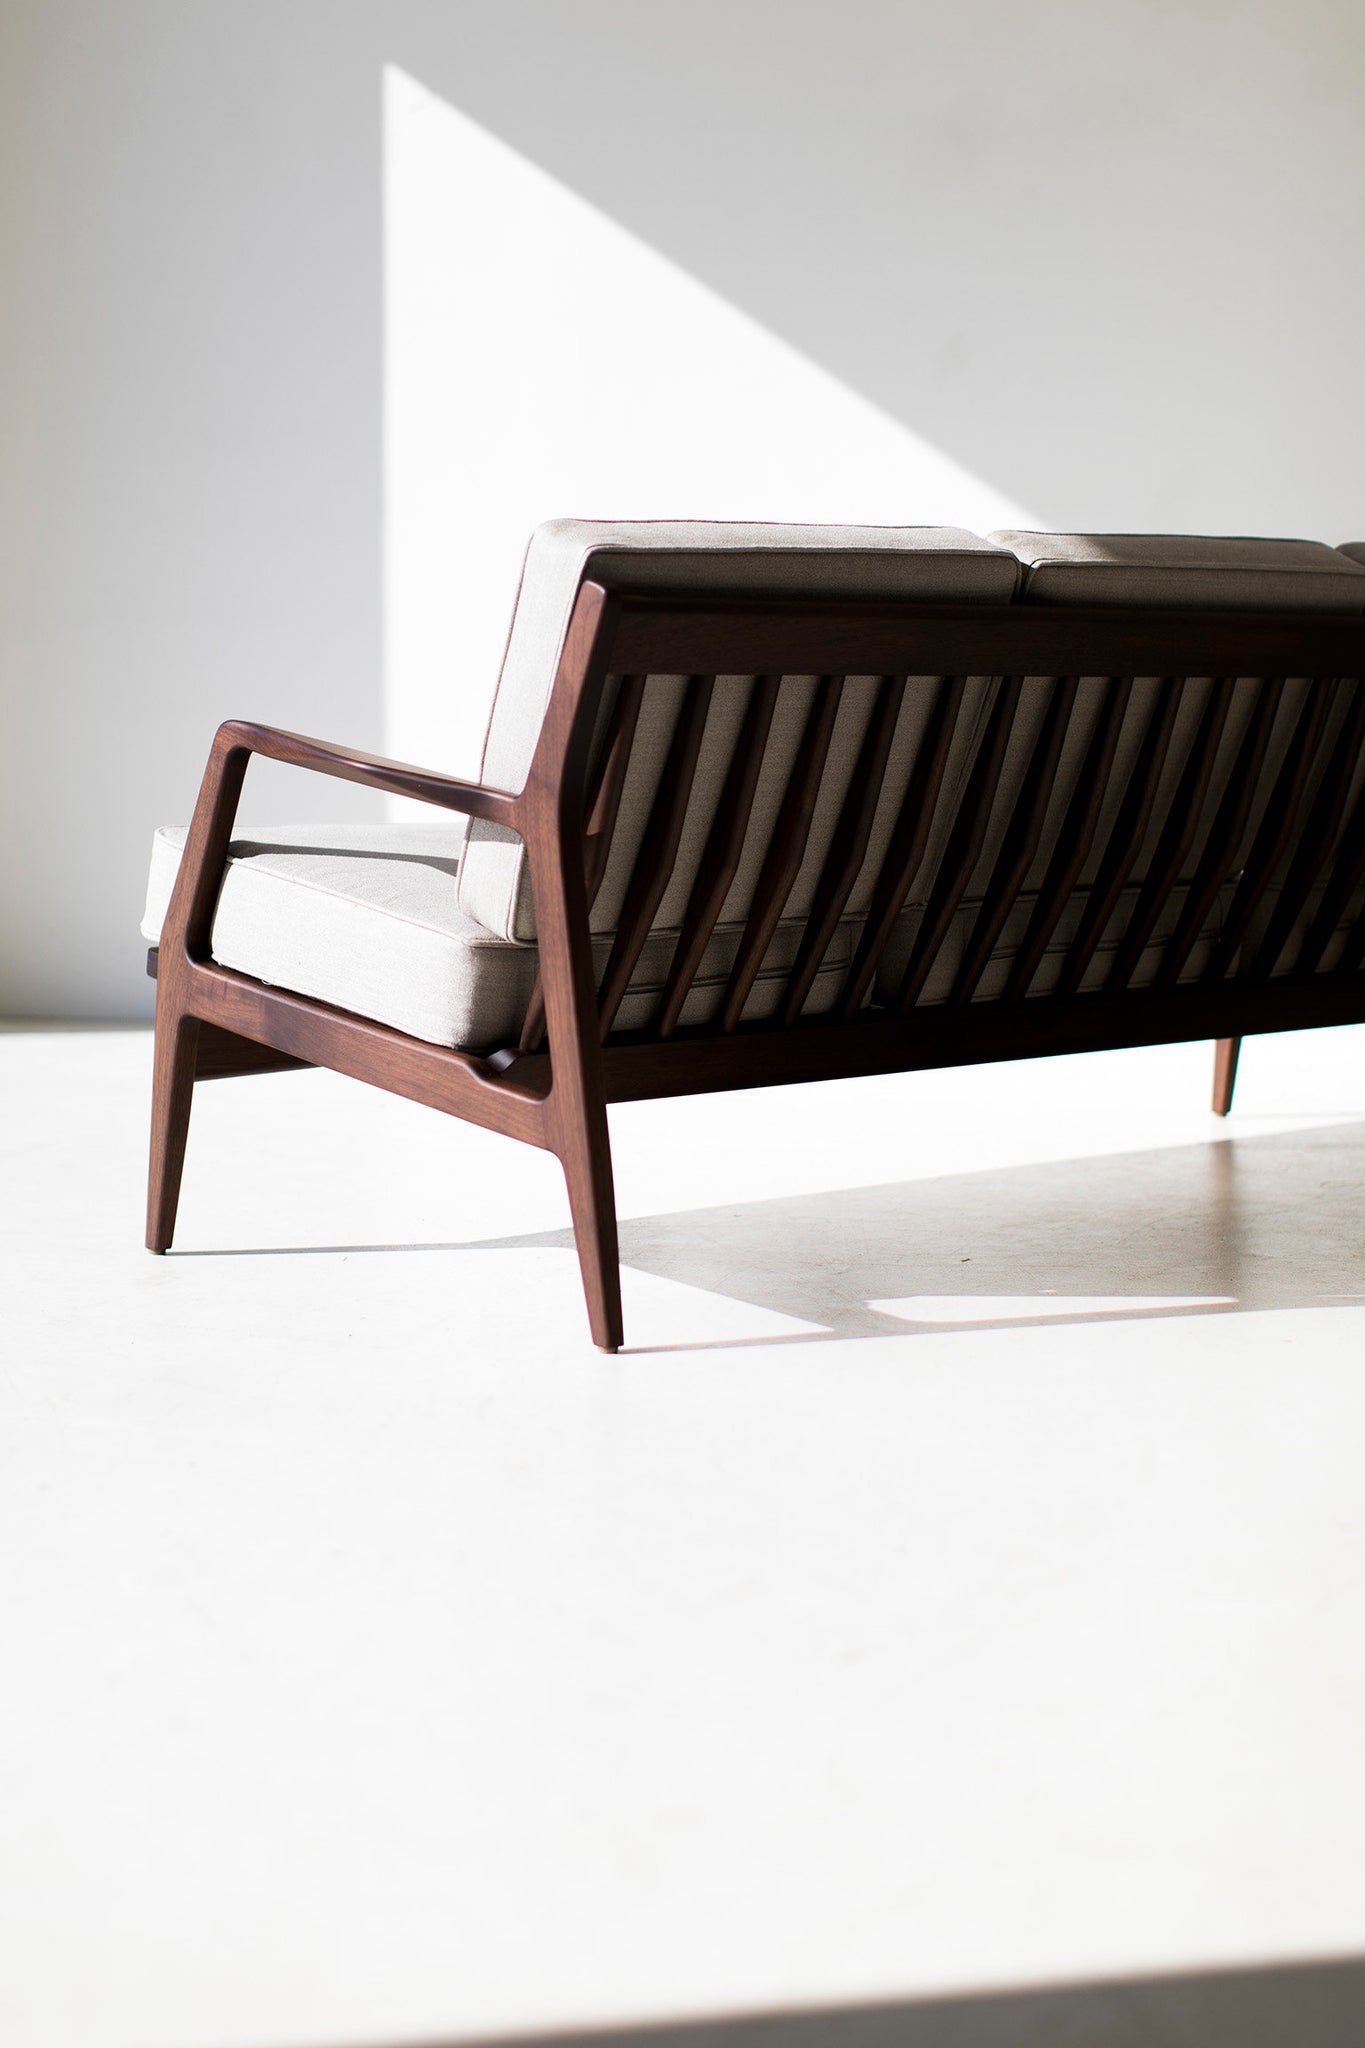 Lawrence-Peabody-Danish-Sofa-P-1713-Craft-Associates-Furniture-12